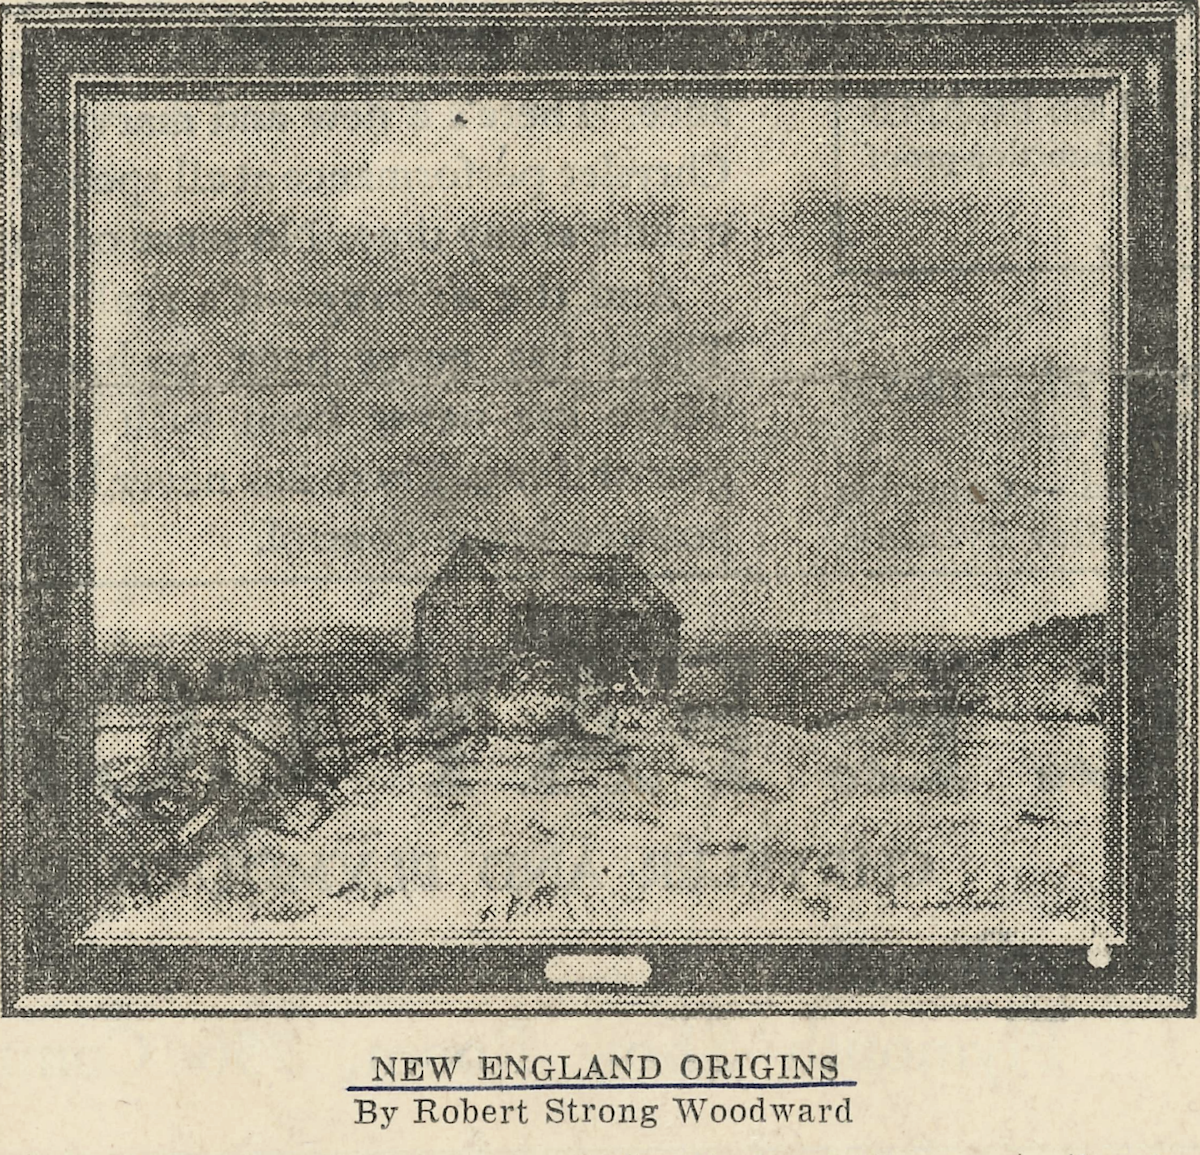 New England Origins, Boston Globe, April 10, 1932